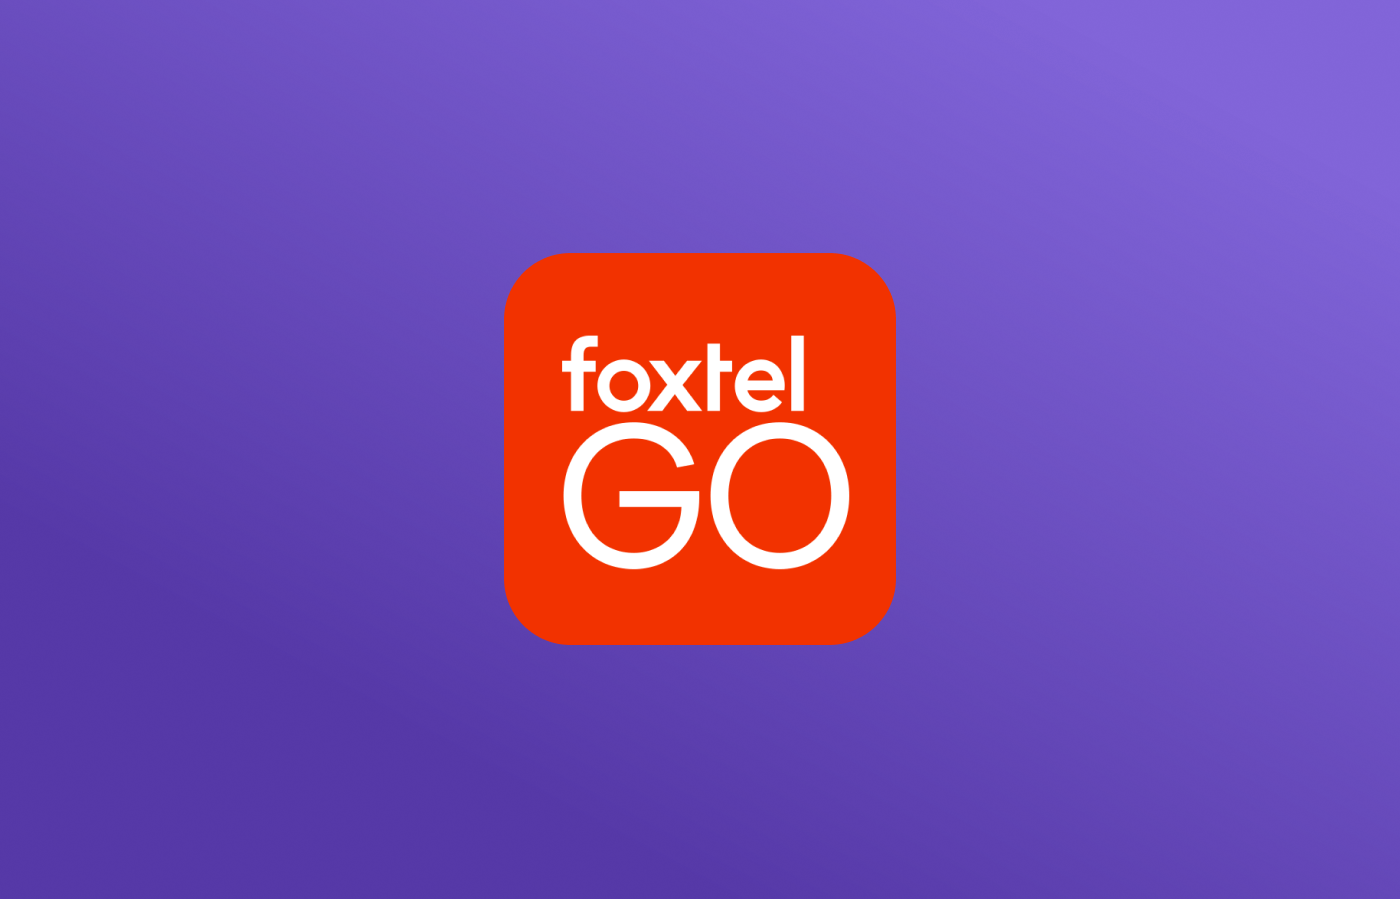 Watch Foxtel GO overseas